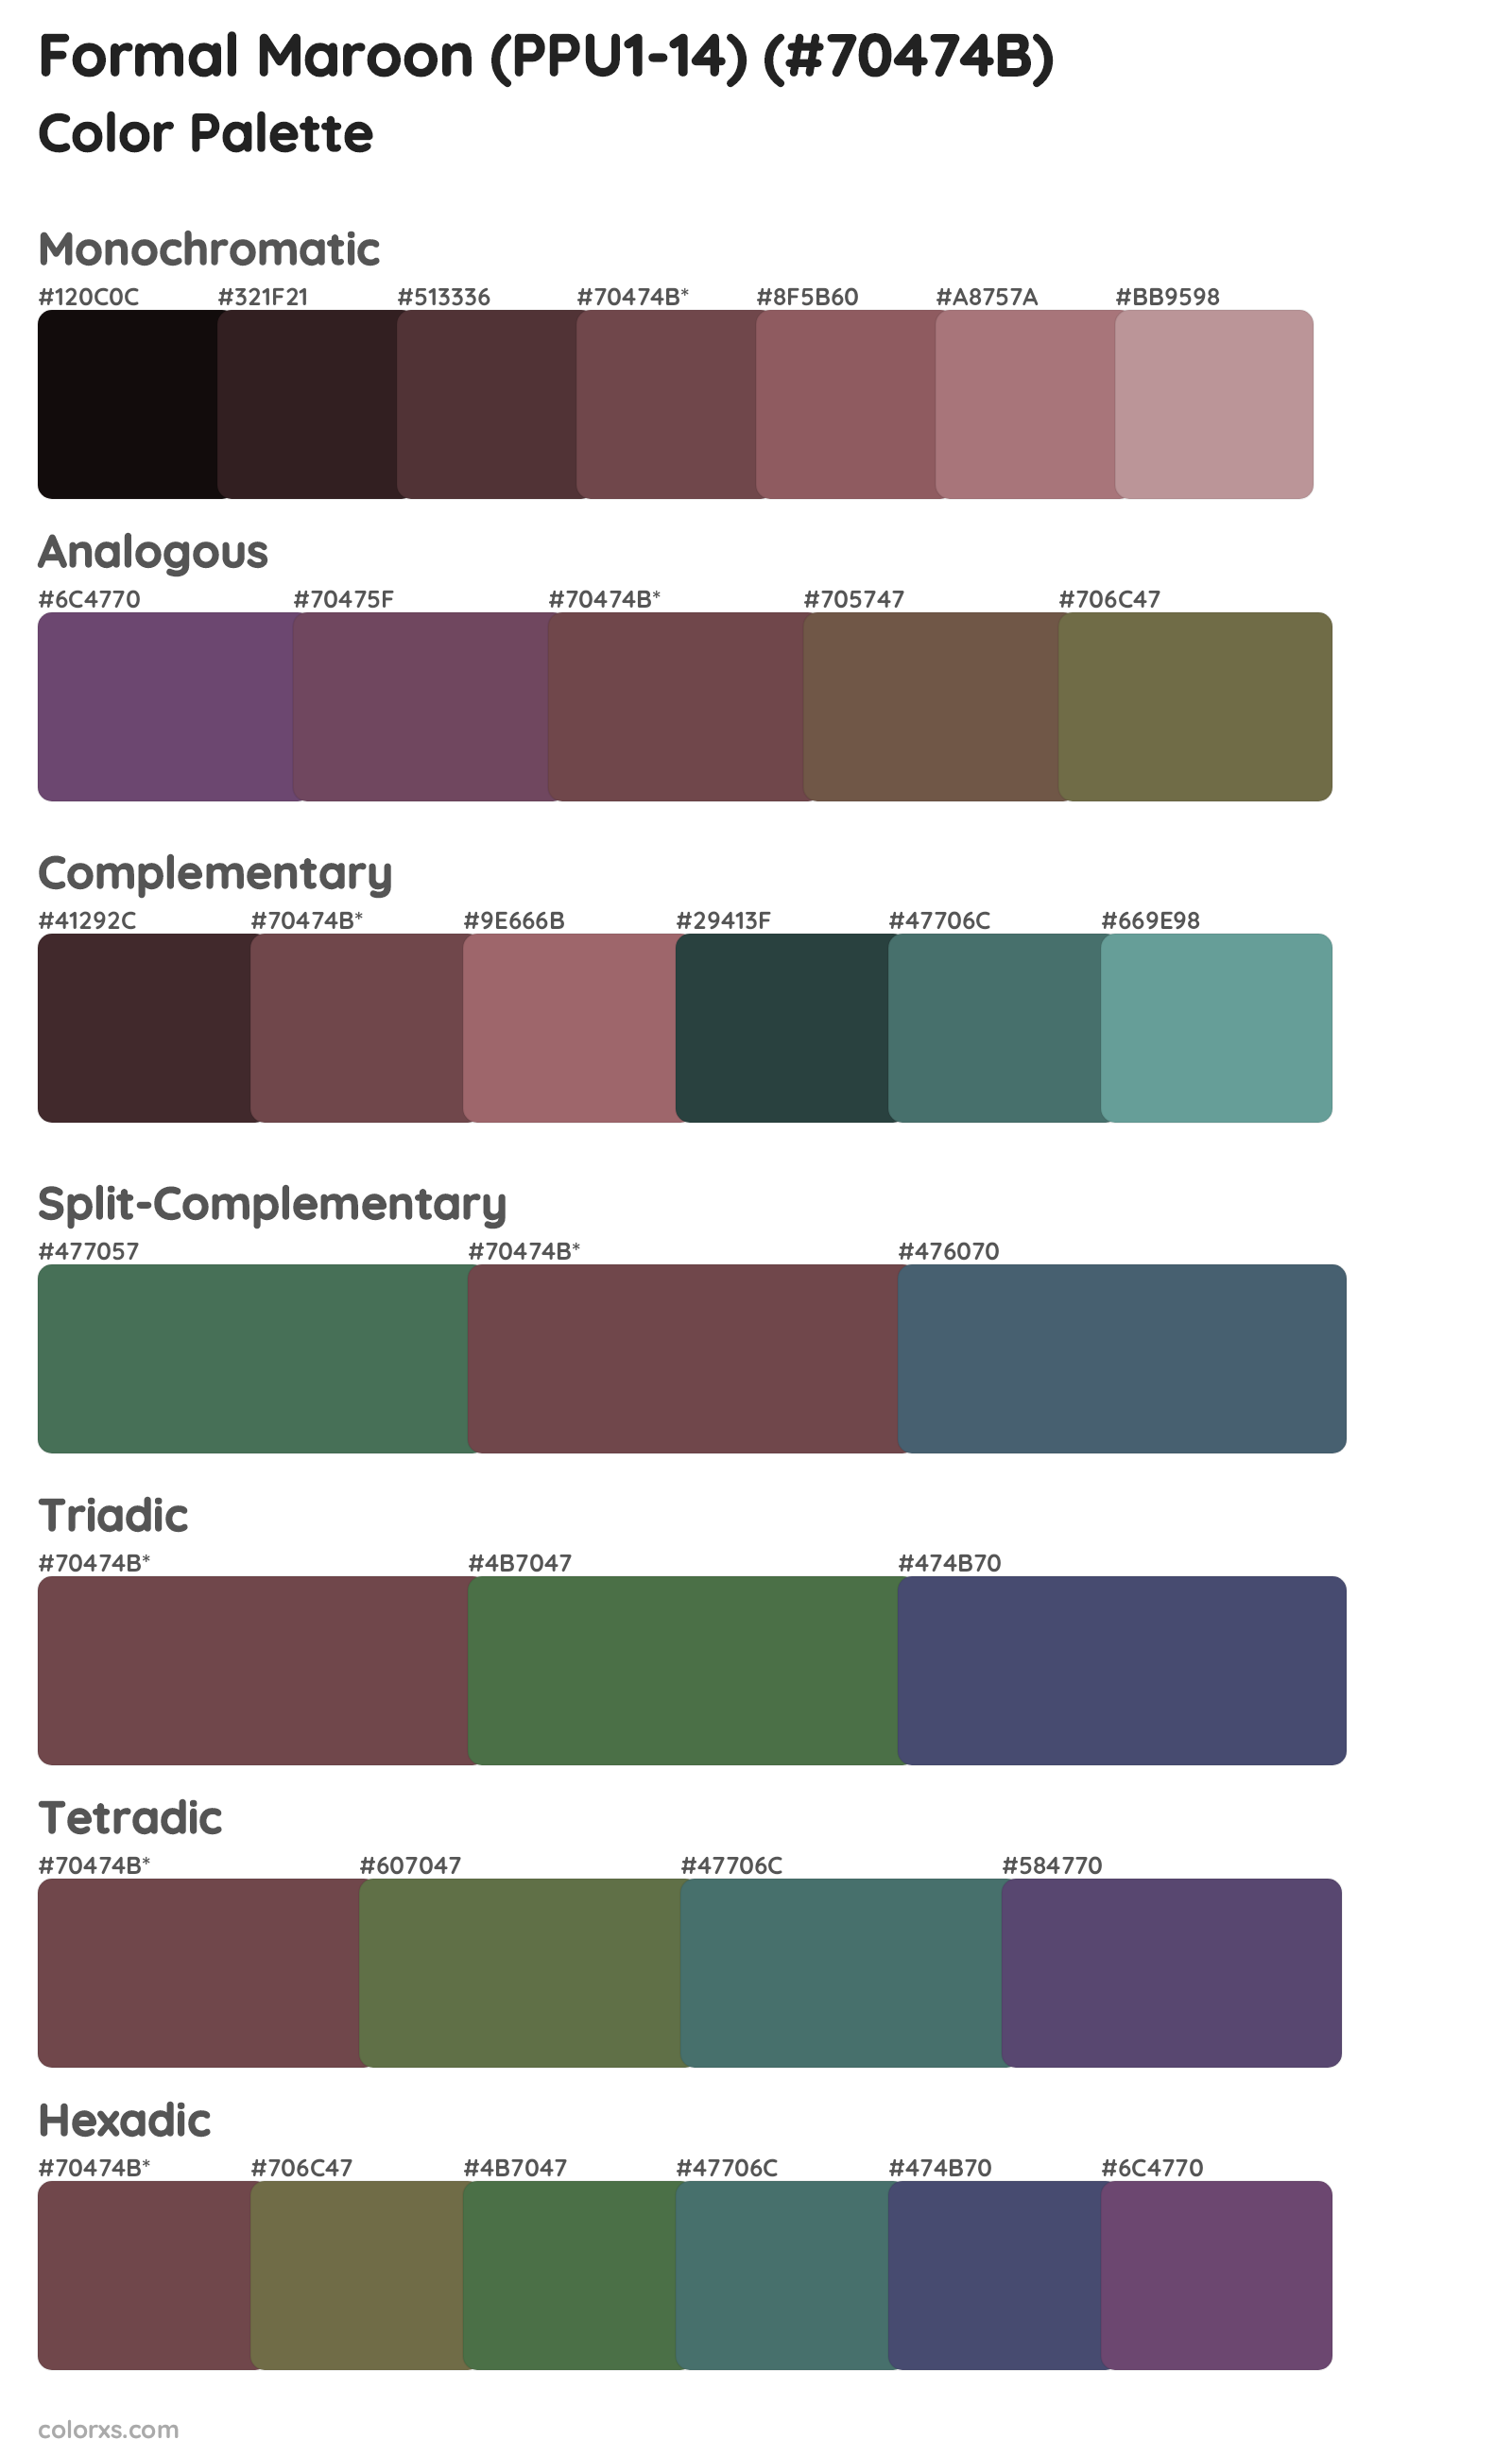 Formal Maroon (PPU1-14) Color Scheme Palettes